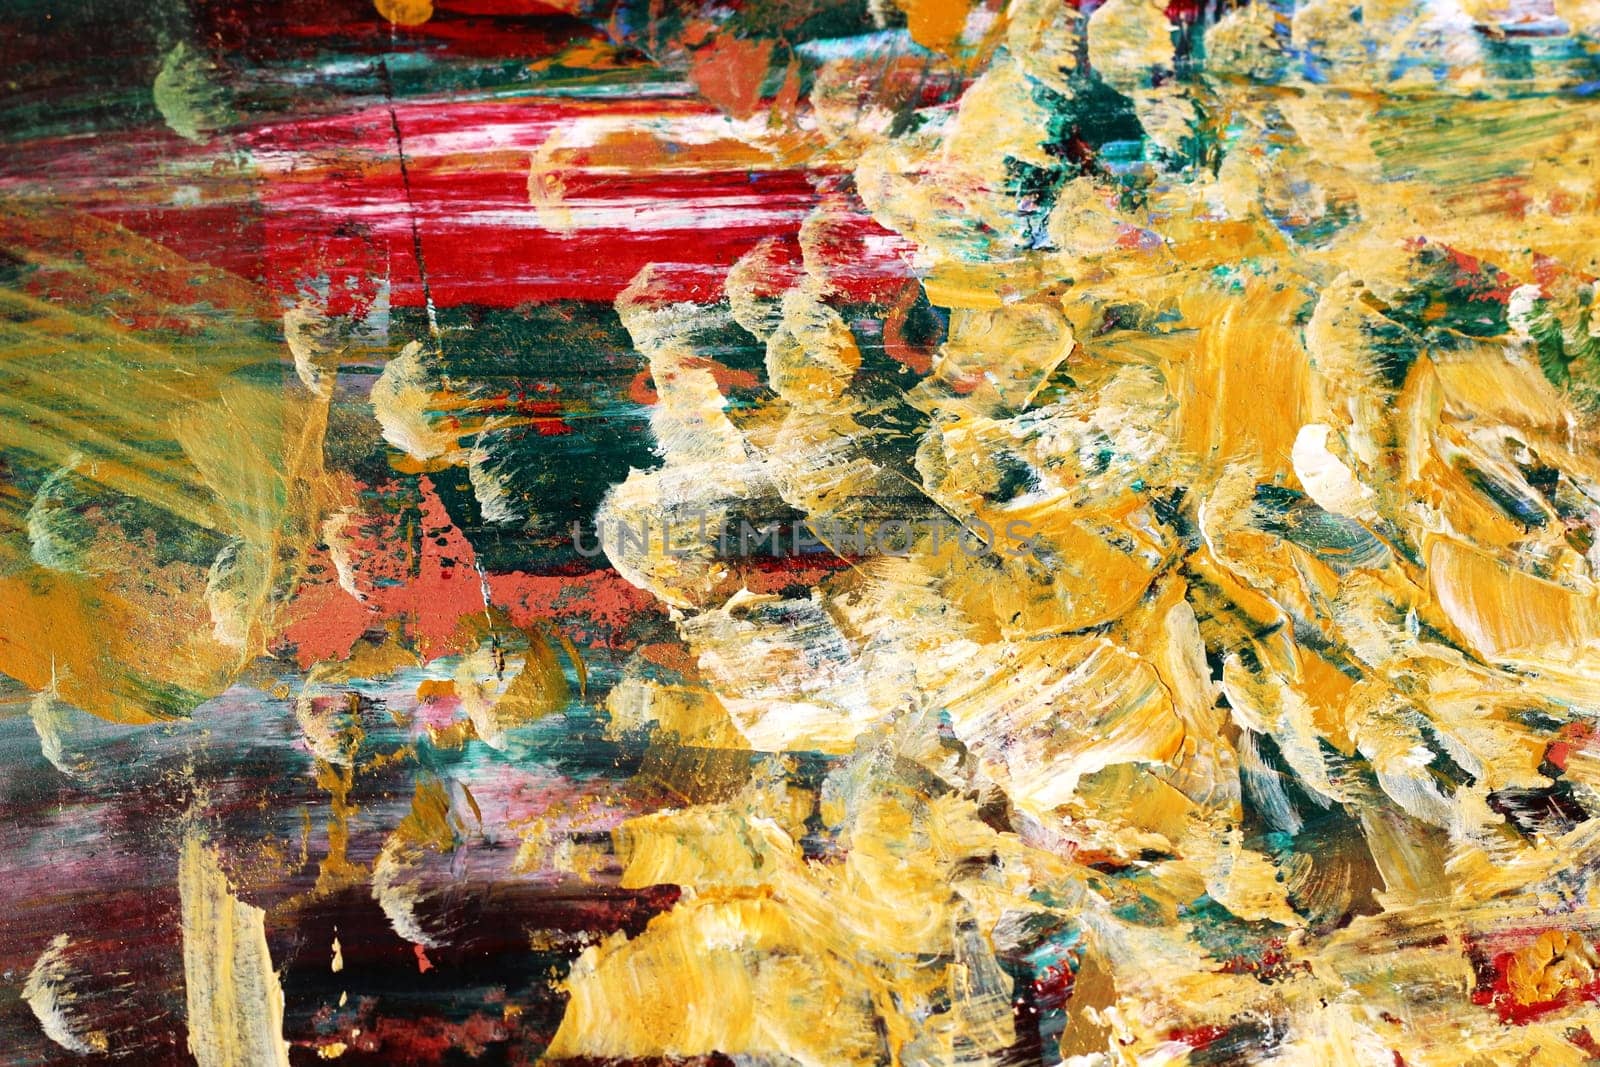 Abstract Texture Symphony: Vibrant Backgrounds for Creative Exploration by DakotaBOldeman